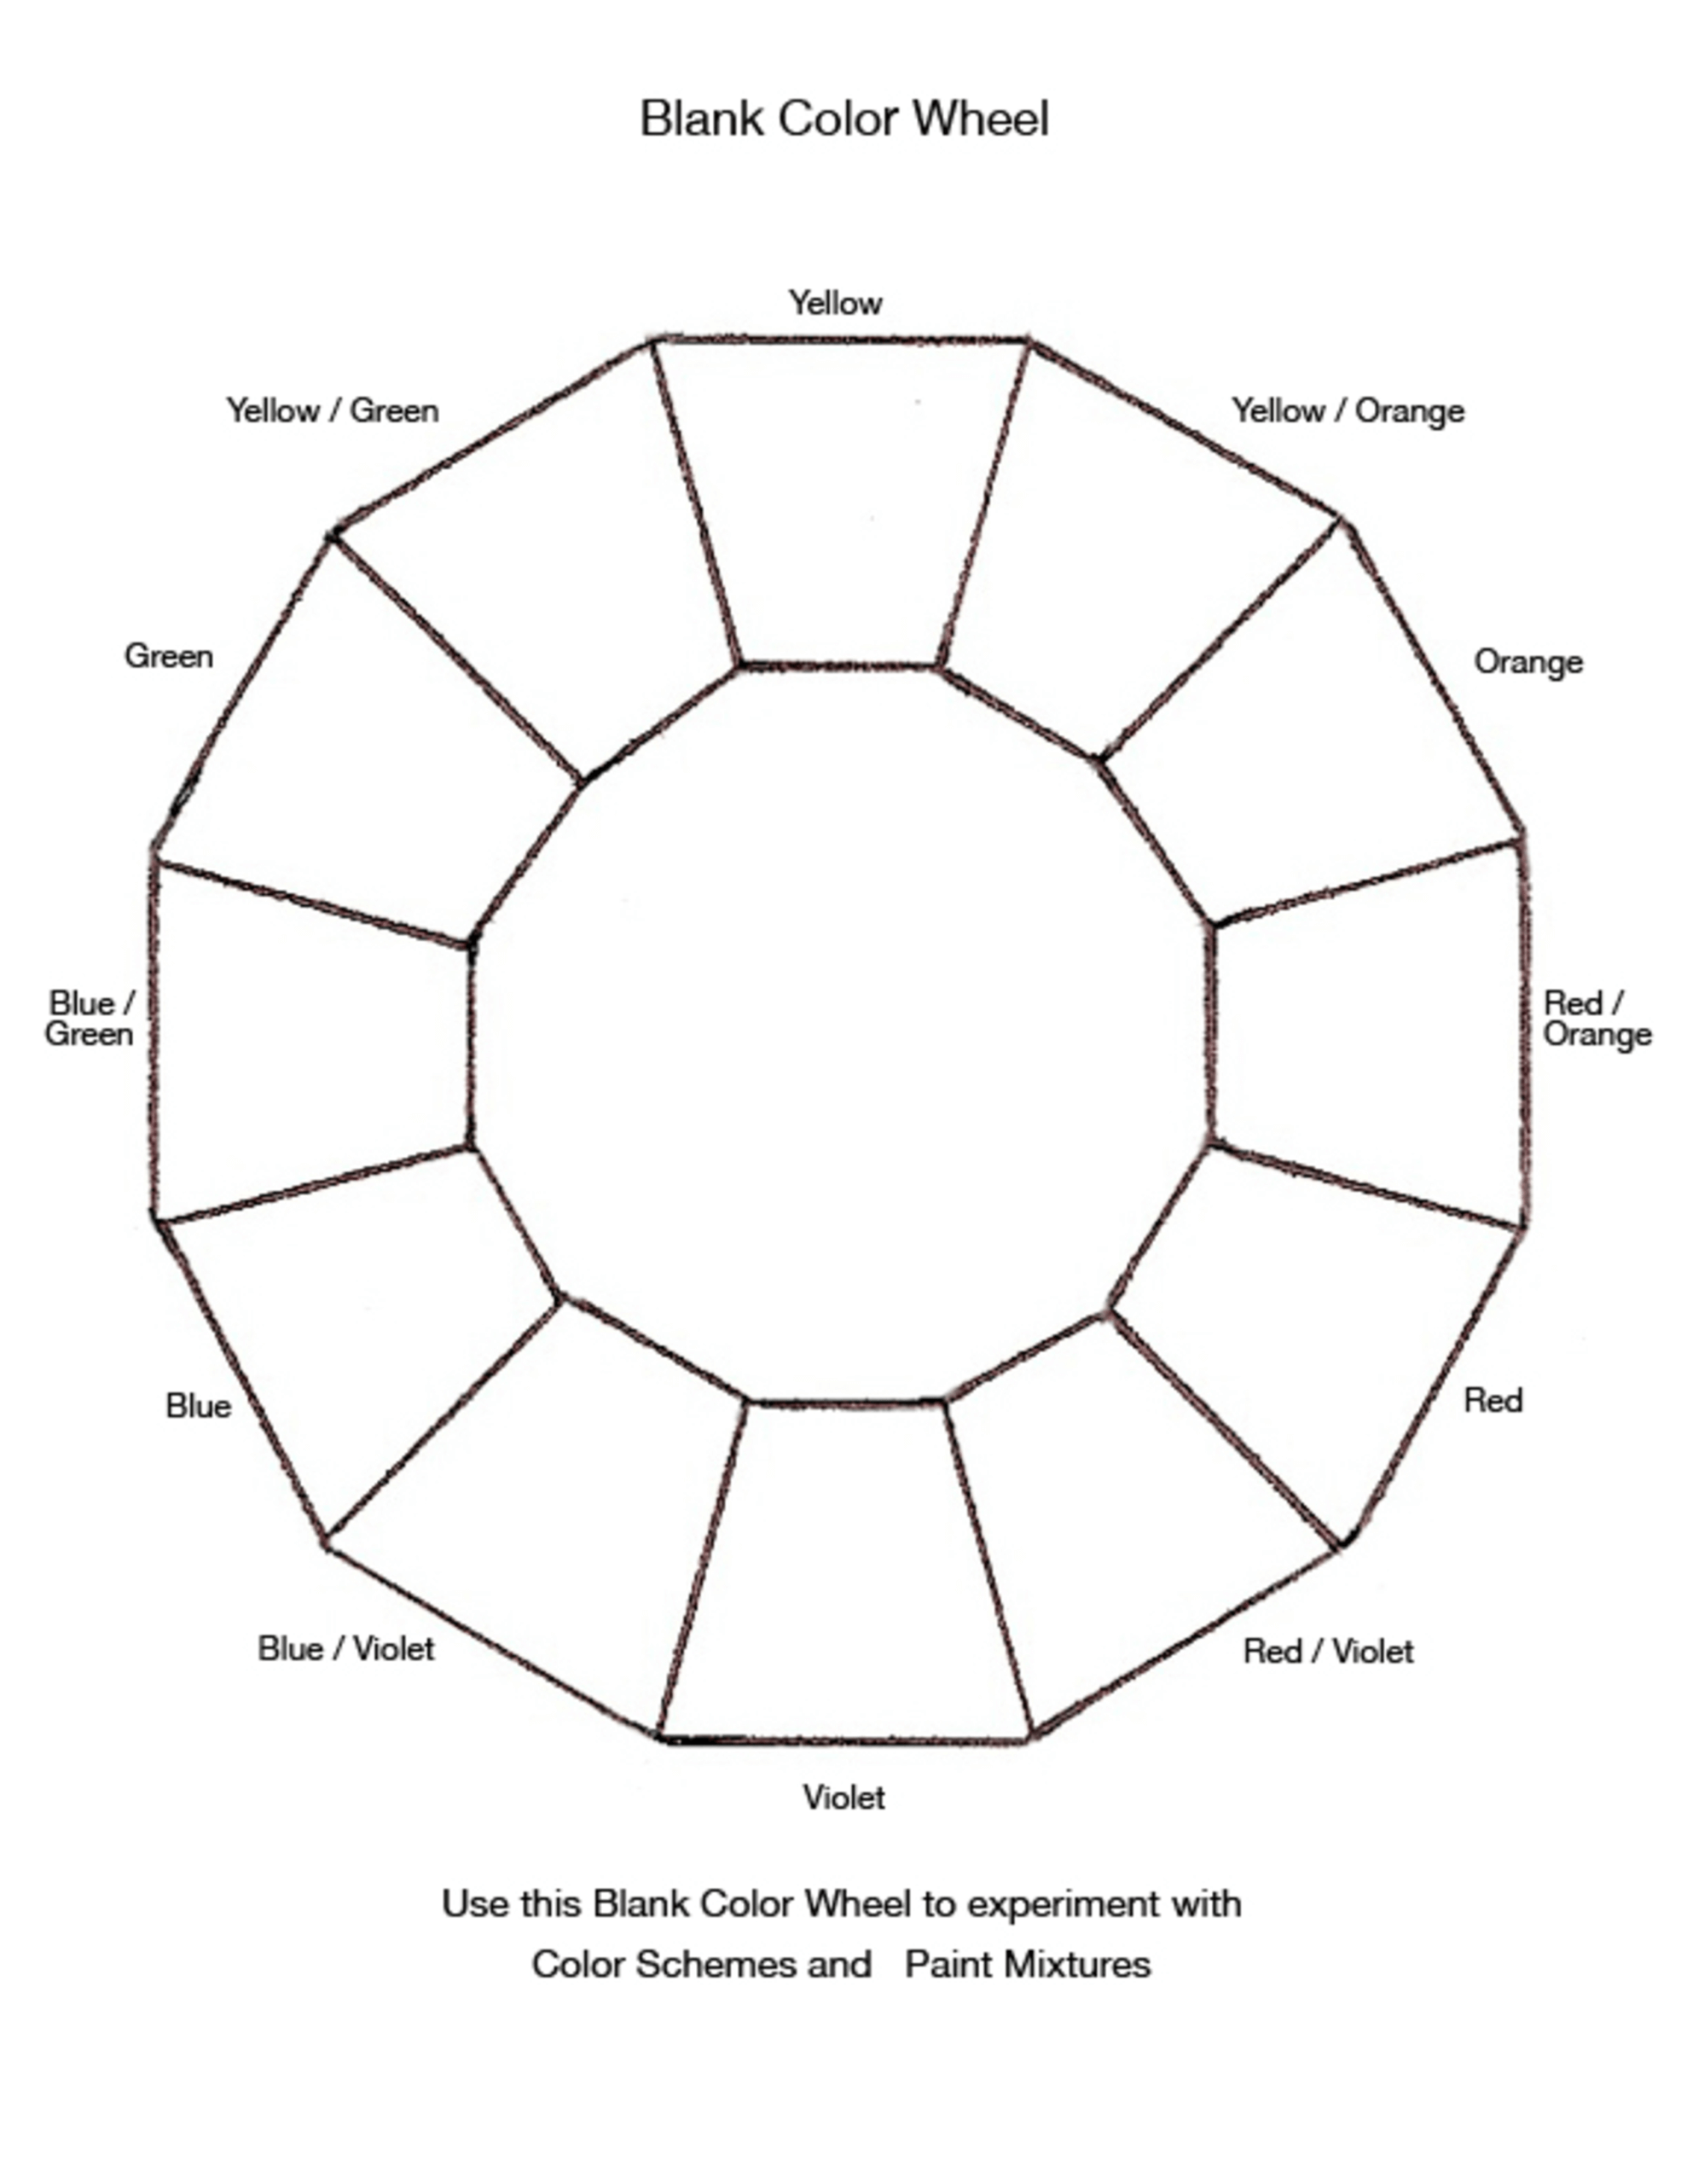 Blank Color Wheel Chart | Templates At Allbusinesstemplates Intended For Blank Color Wheel Template